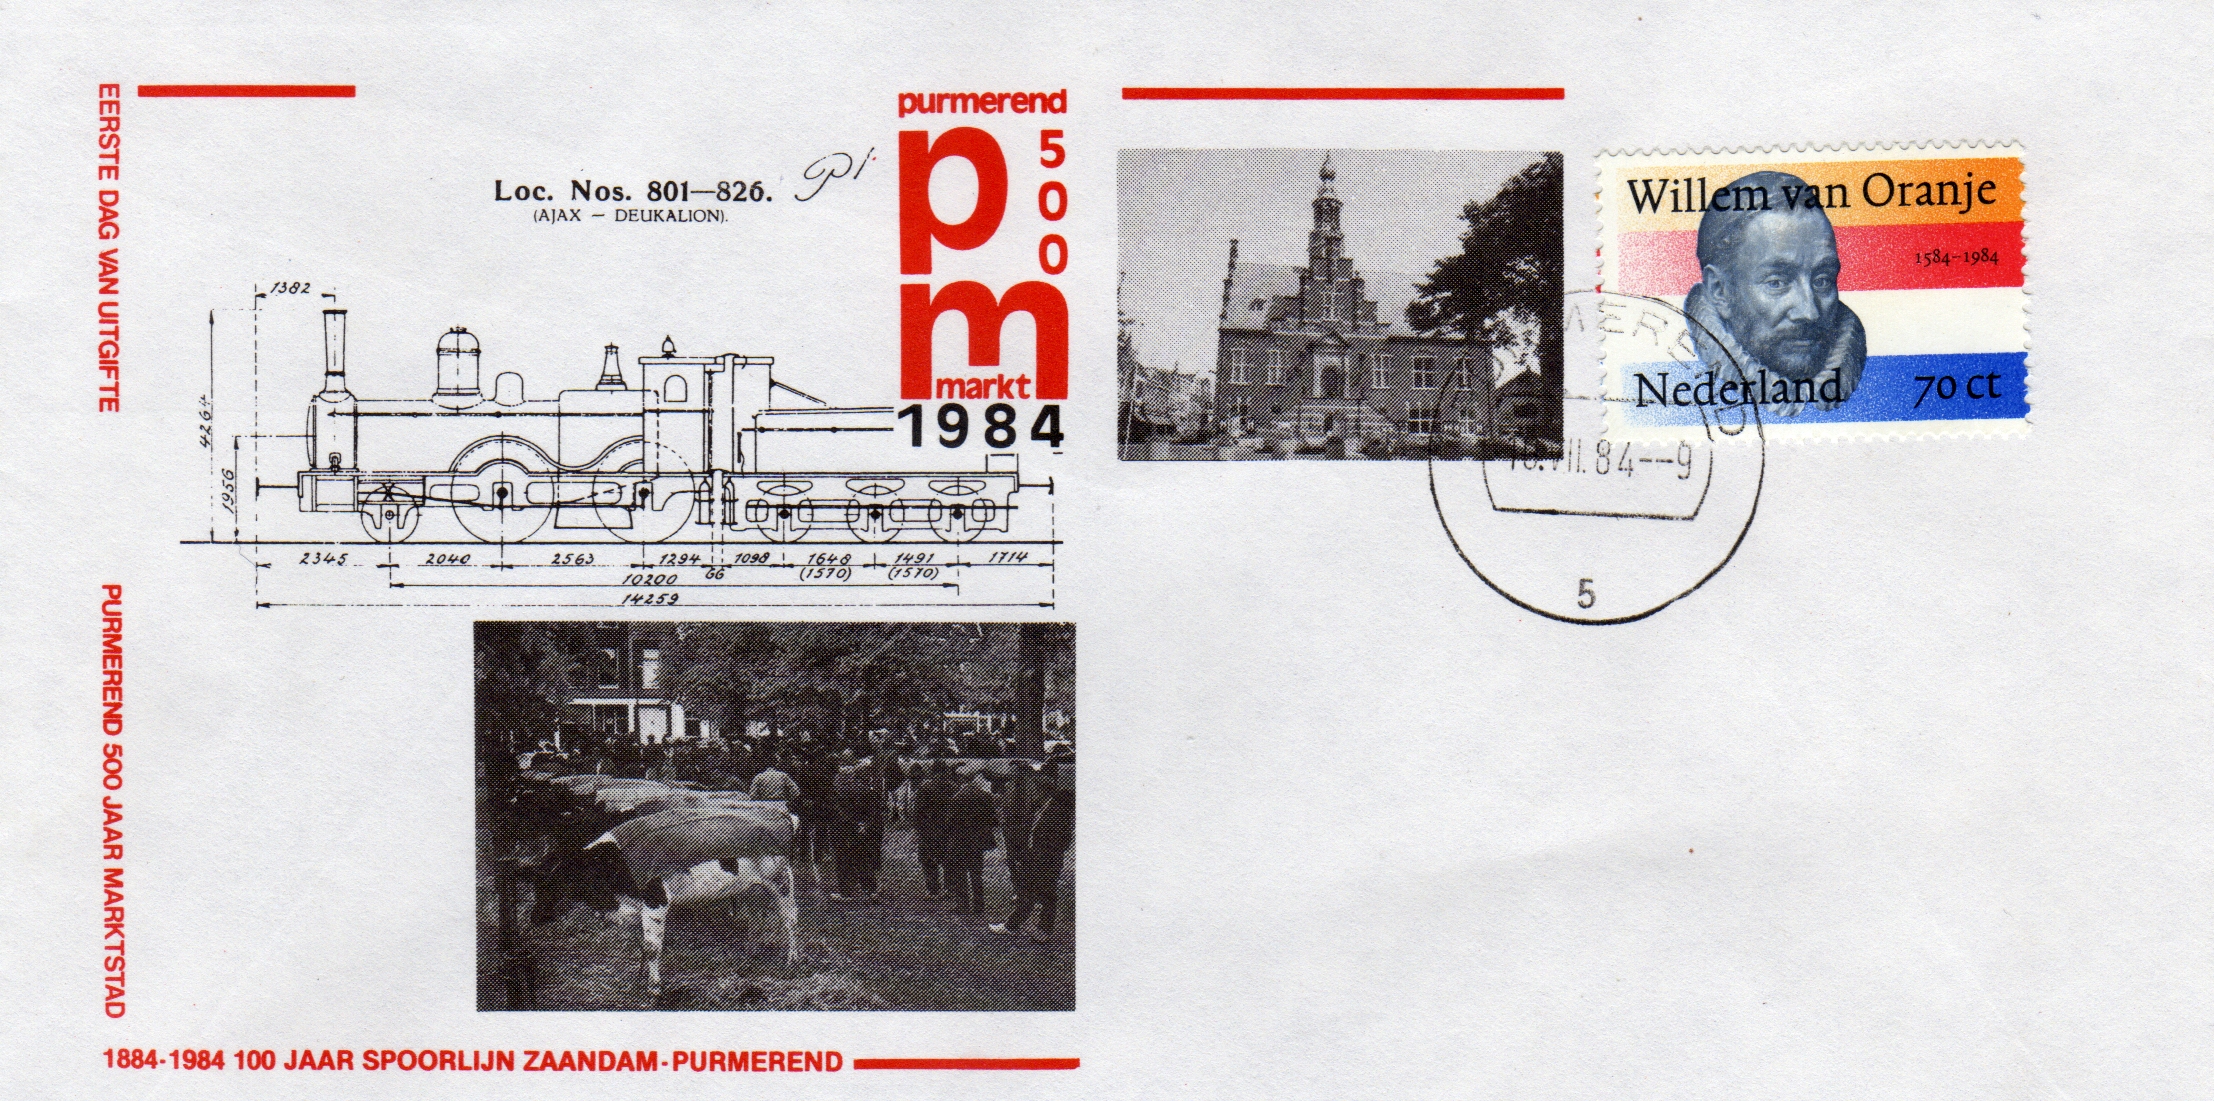 FDC: centenary of Zaandam - Purmerend railway line, 1984